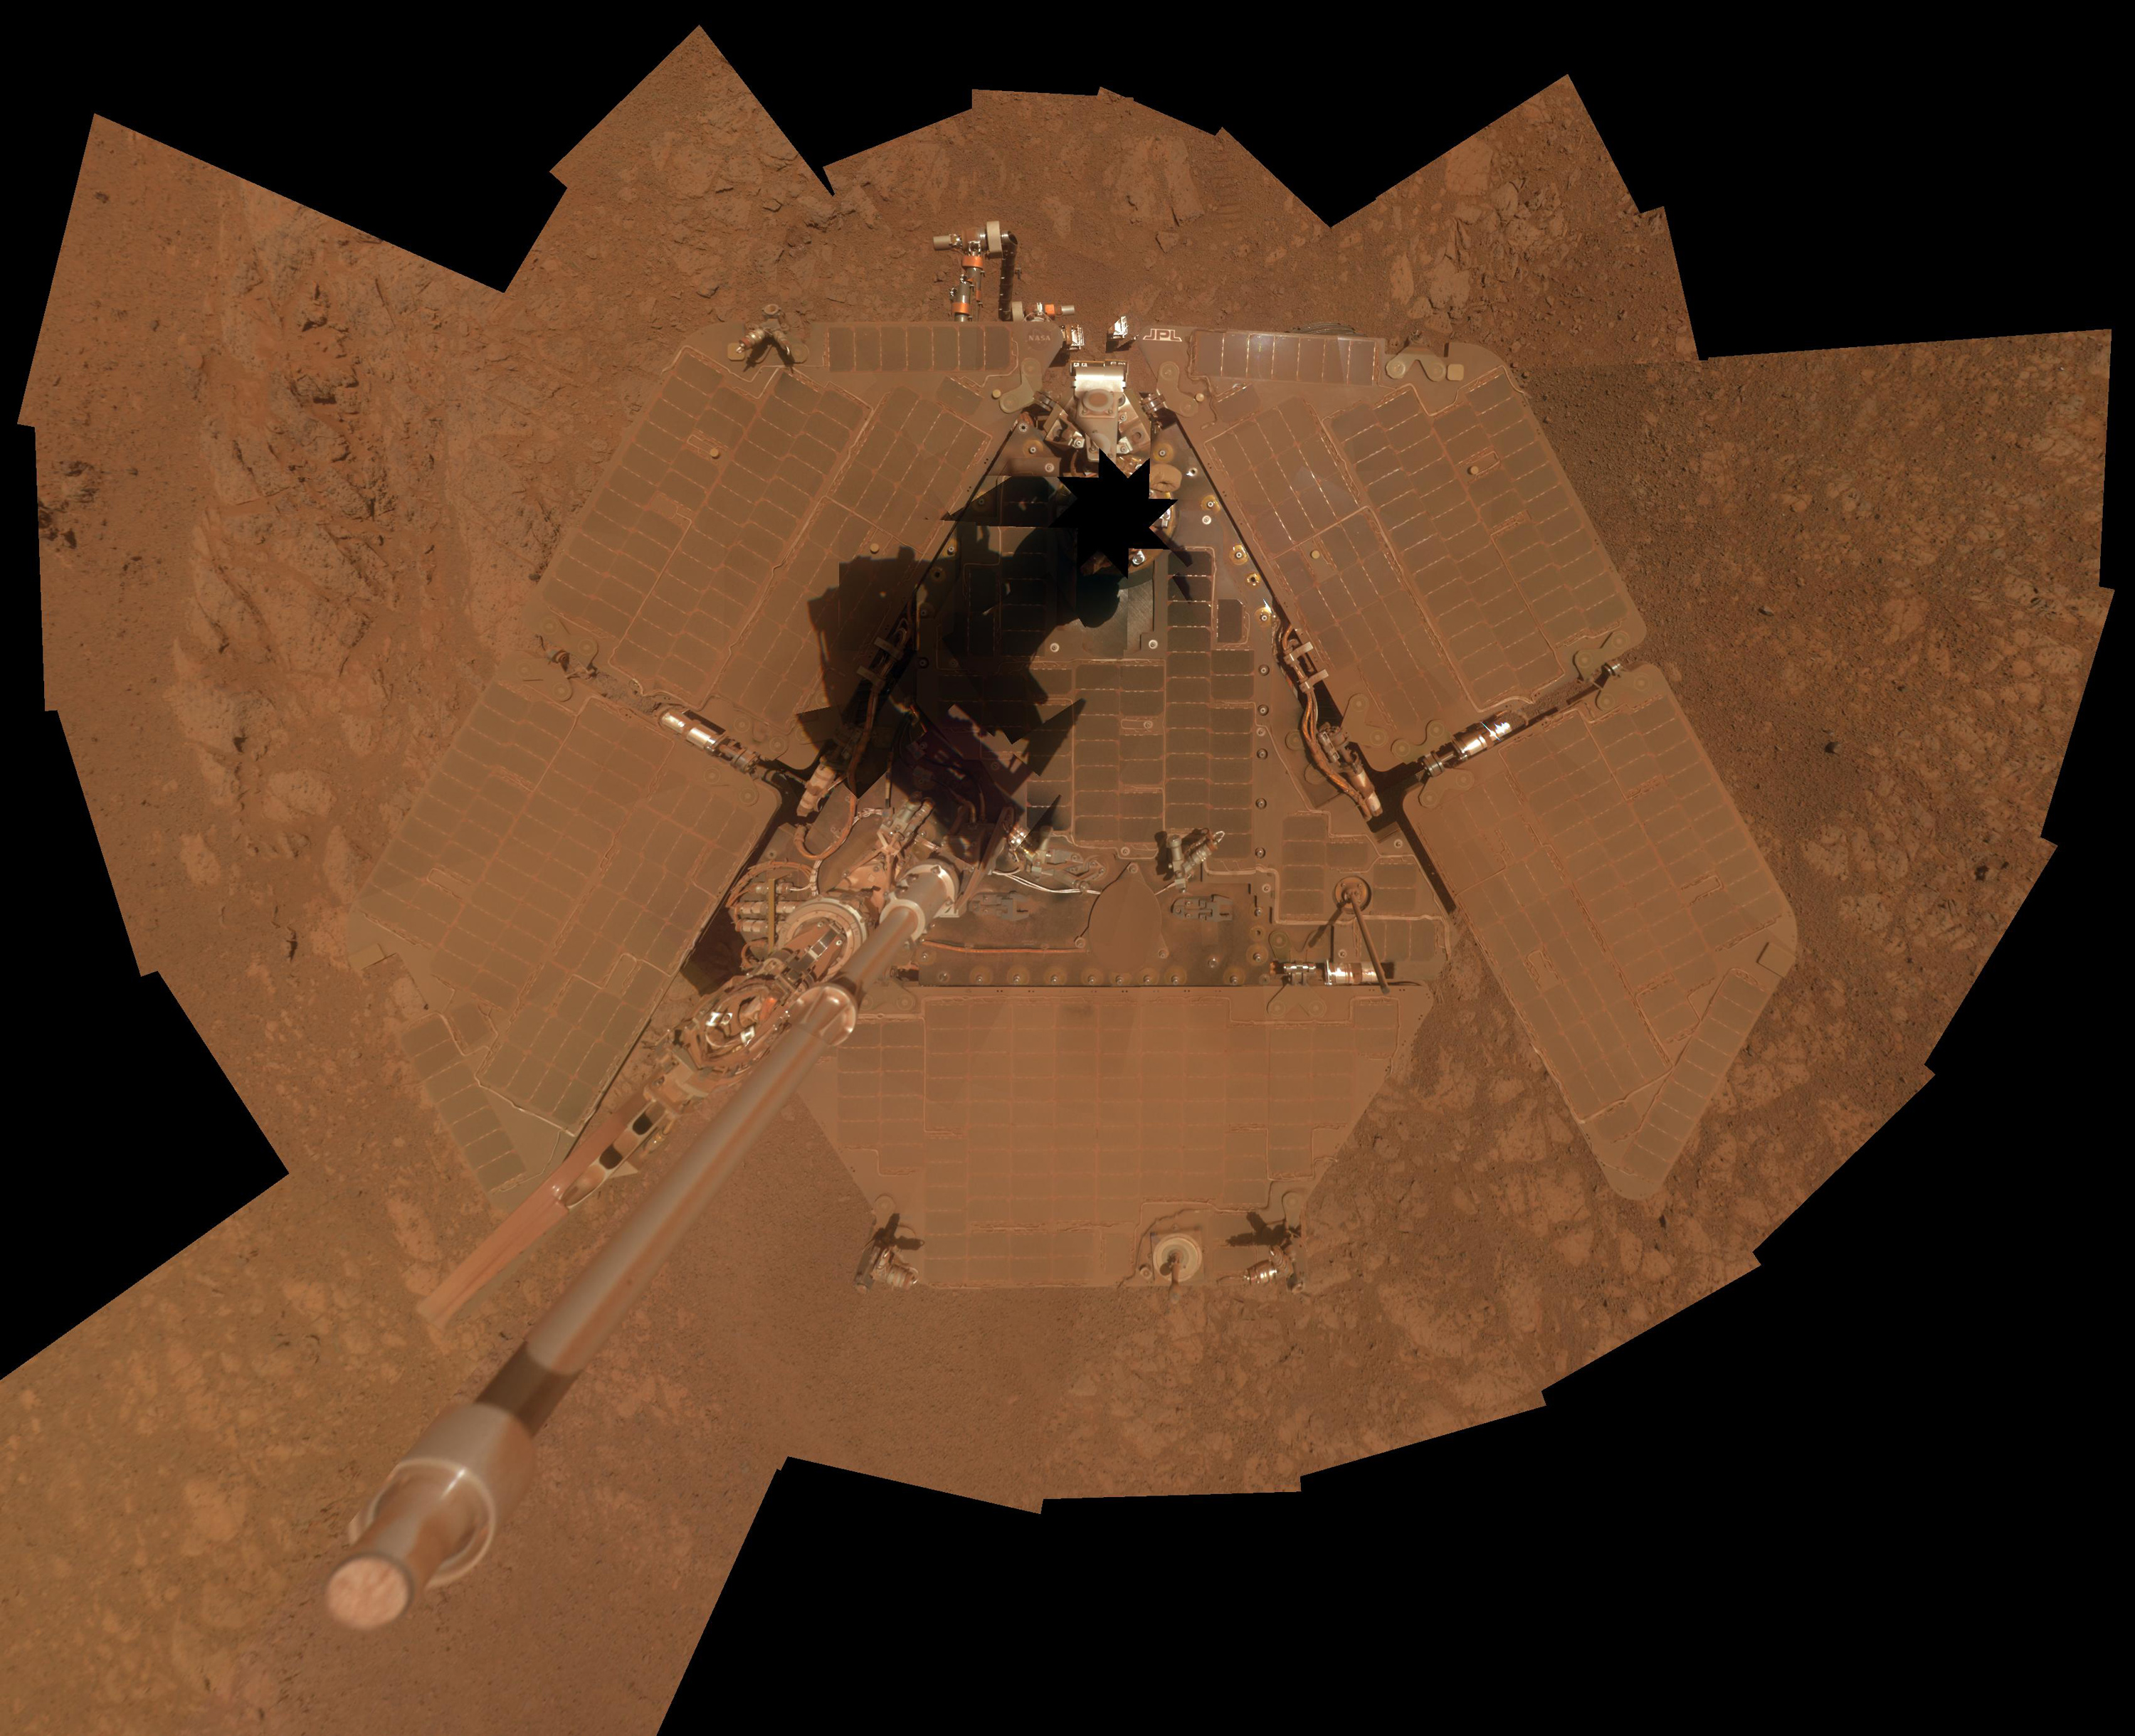 Solar panels on Mars - very dusty